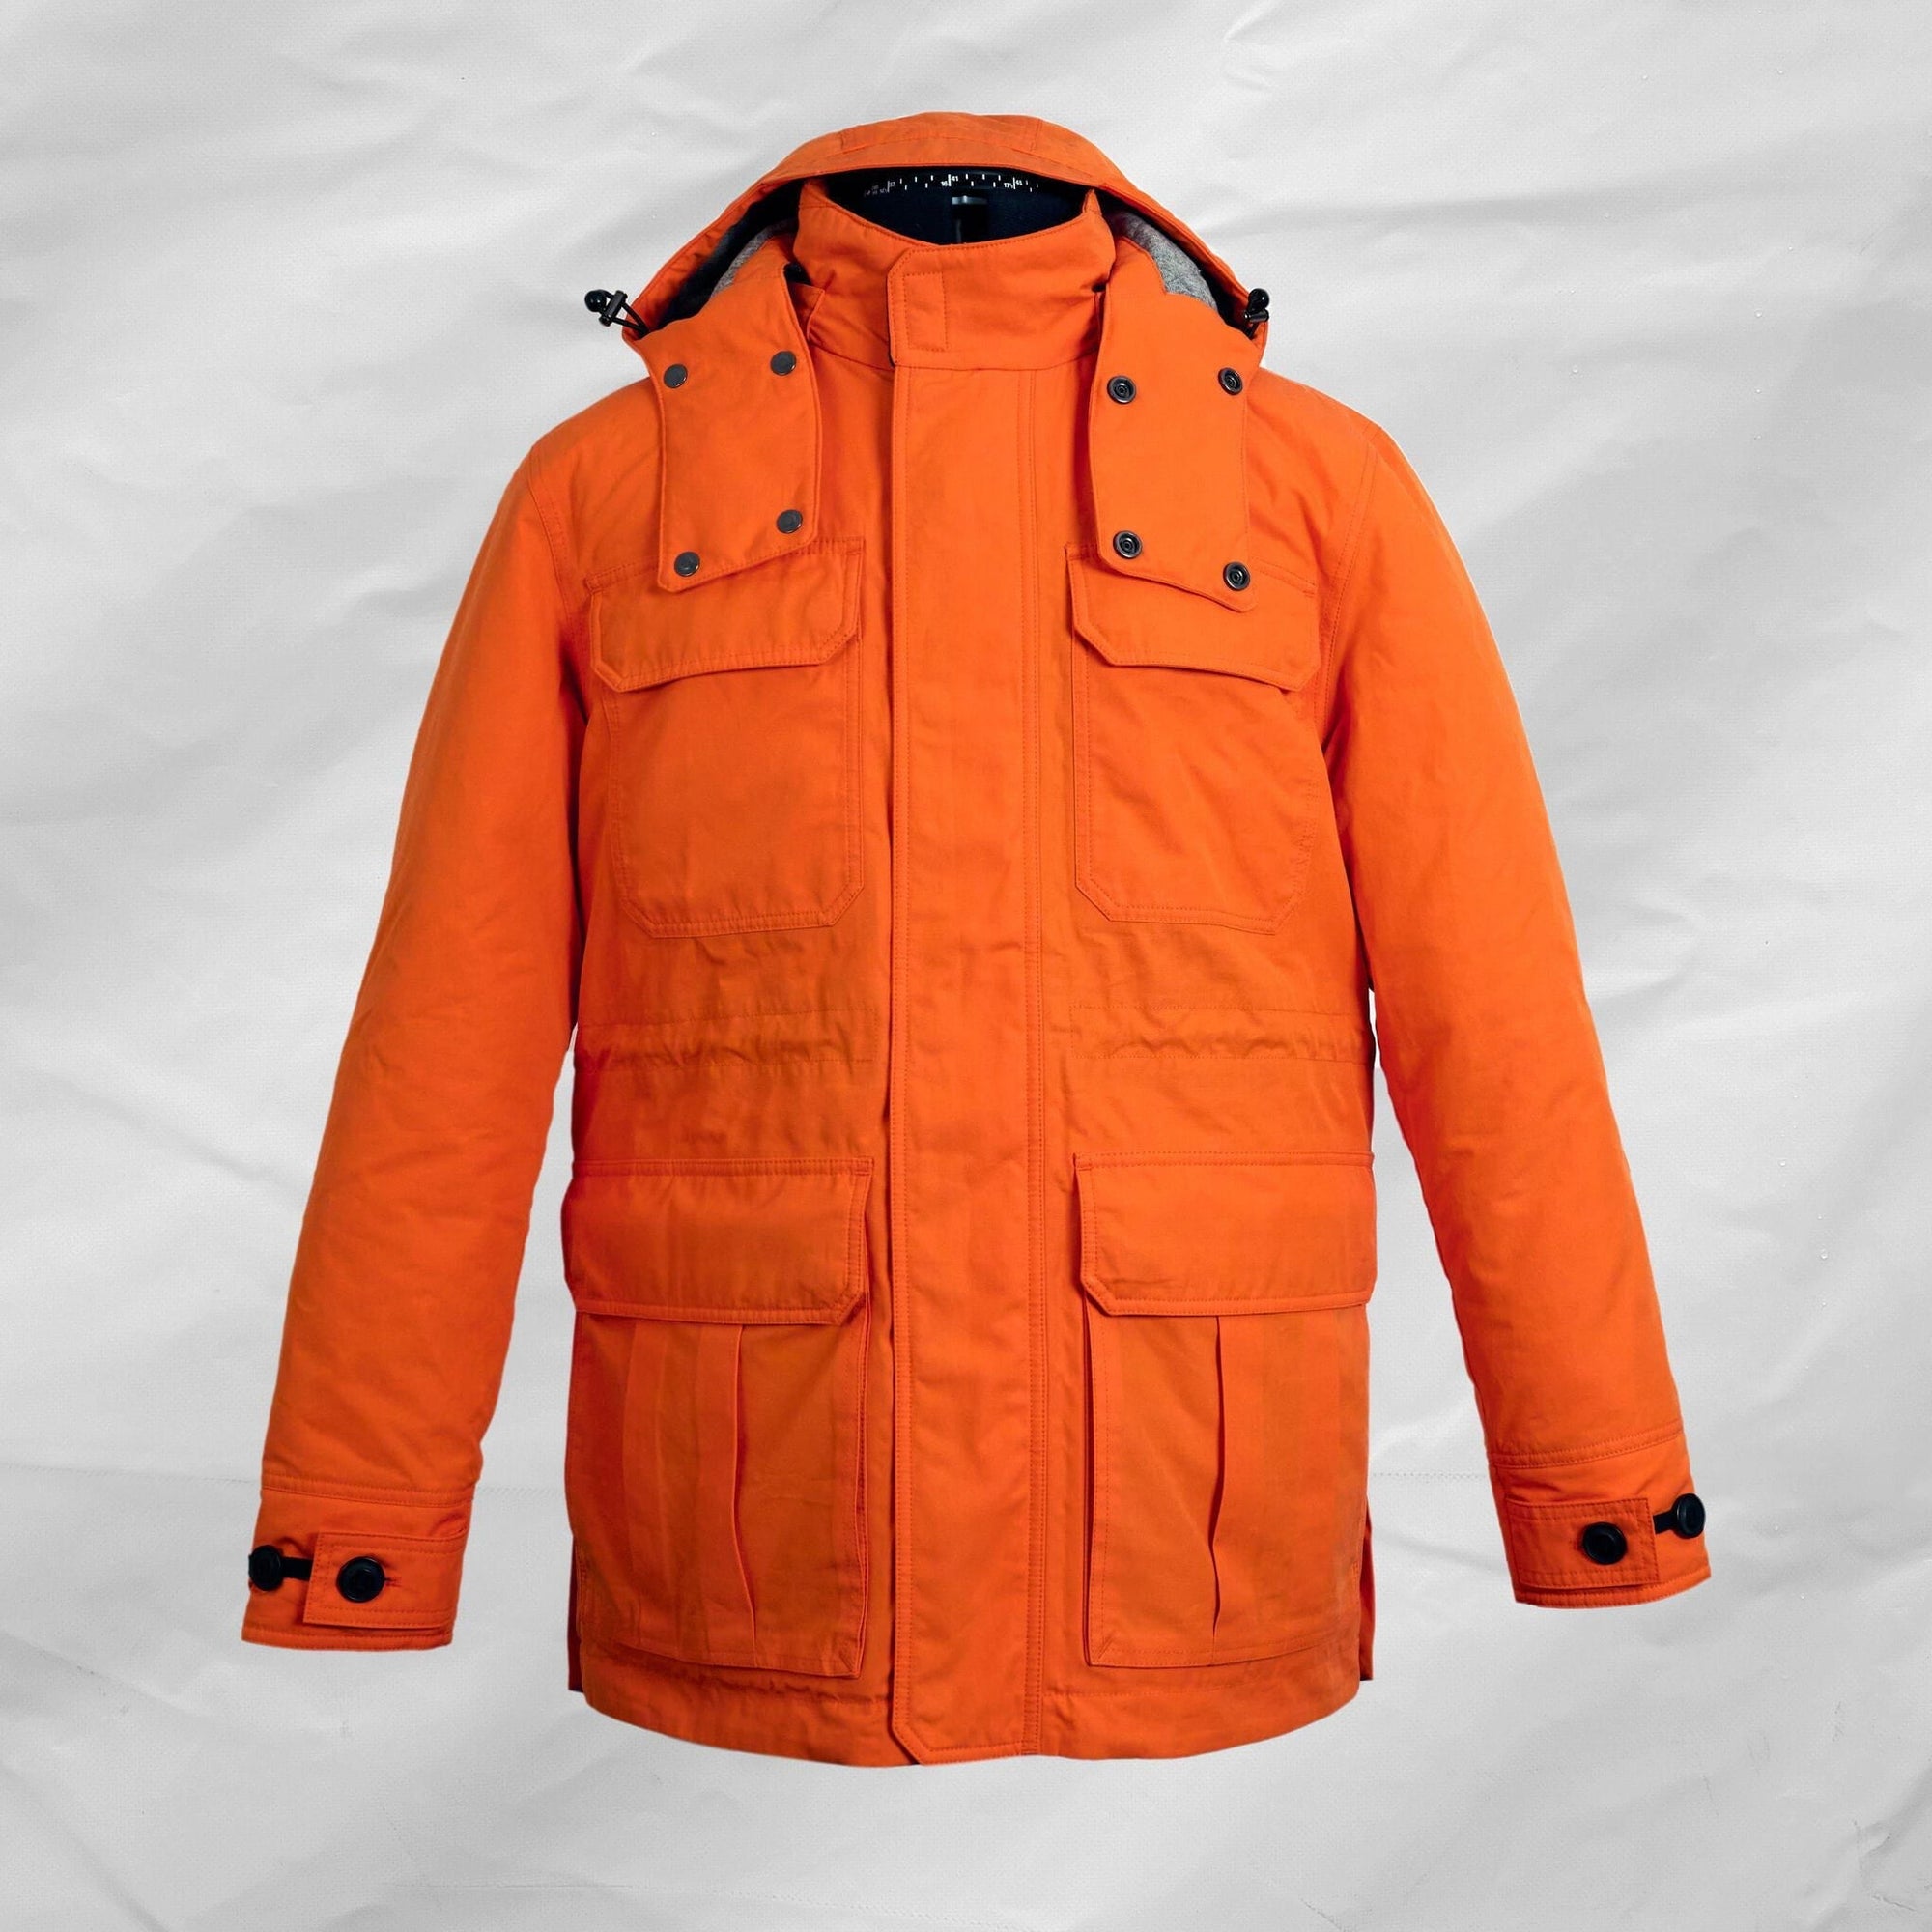 FRAHM Jacket Jacket Ventile Thermal Field Jacket (new)